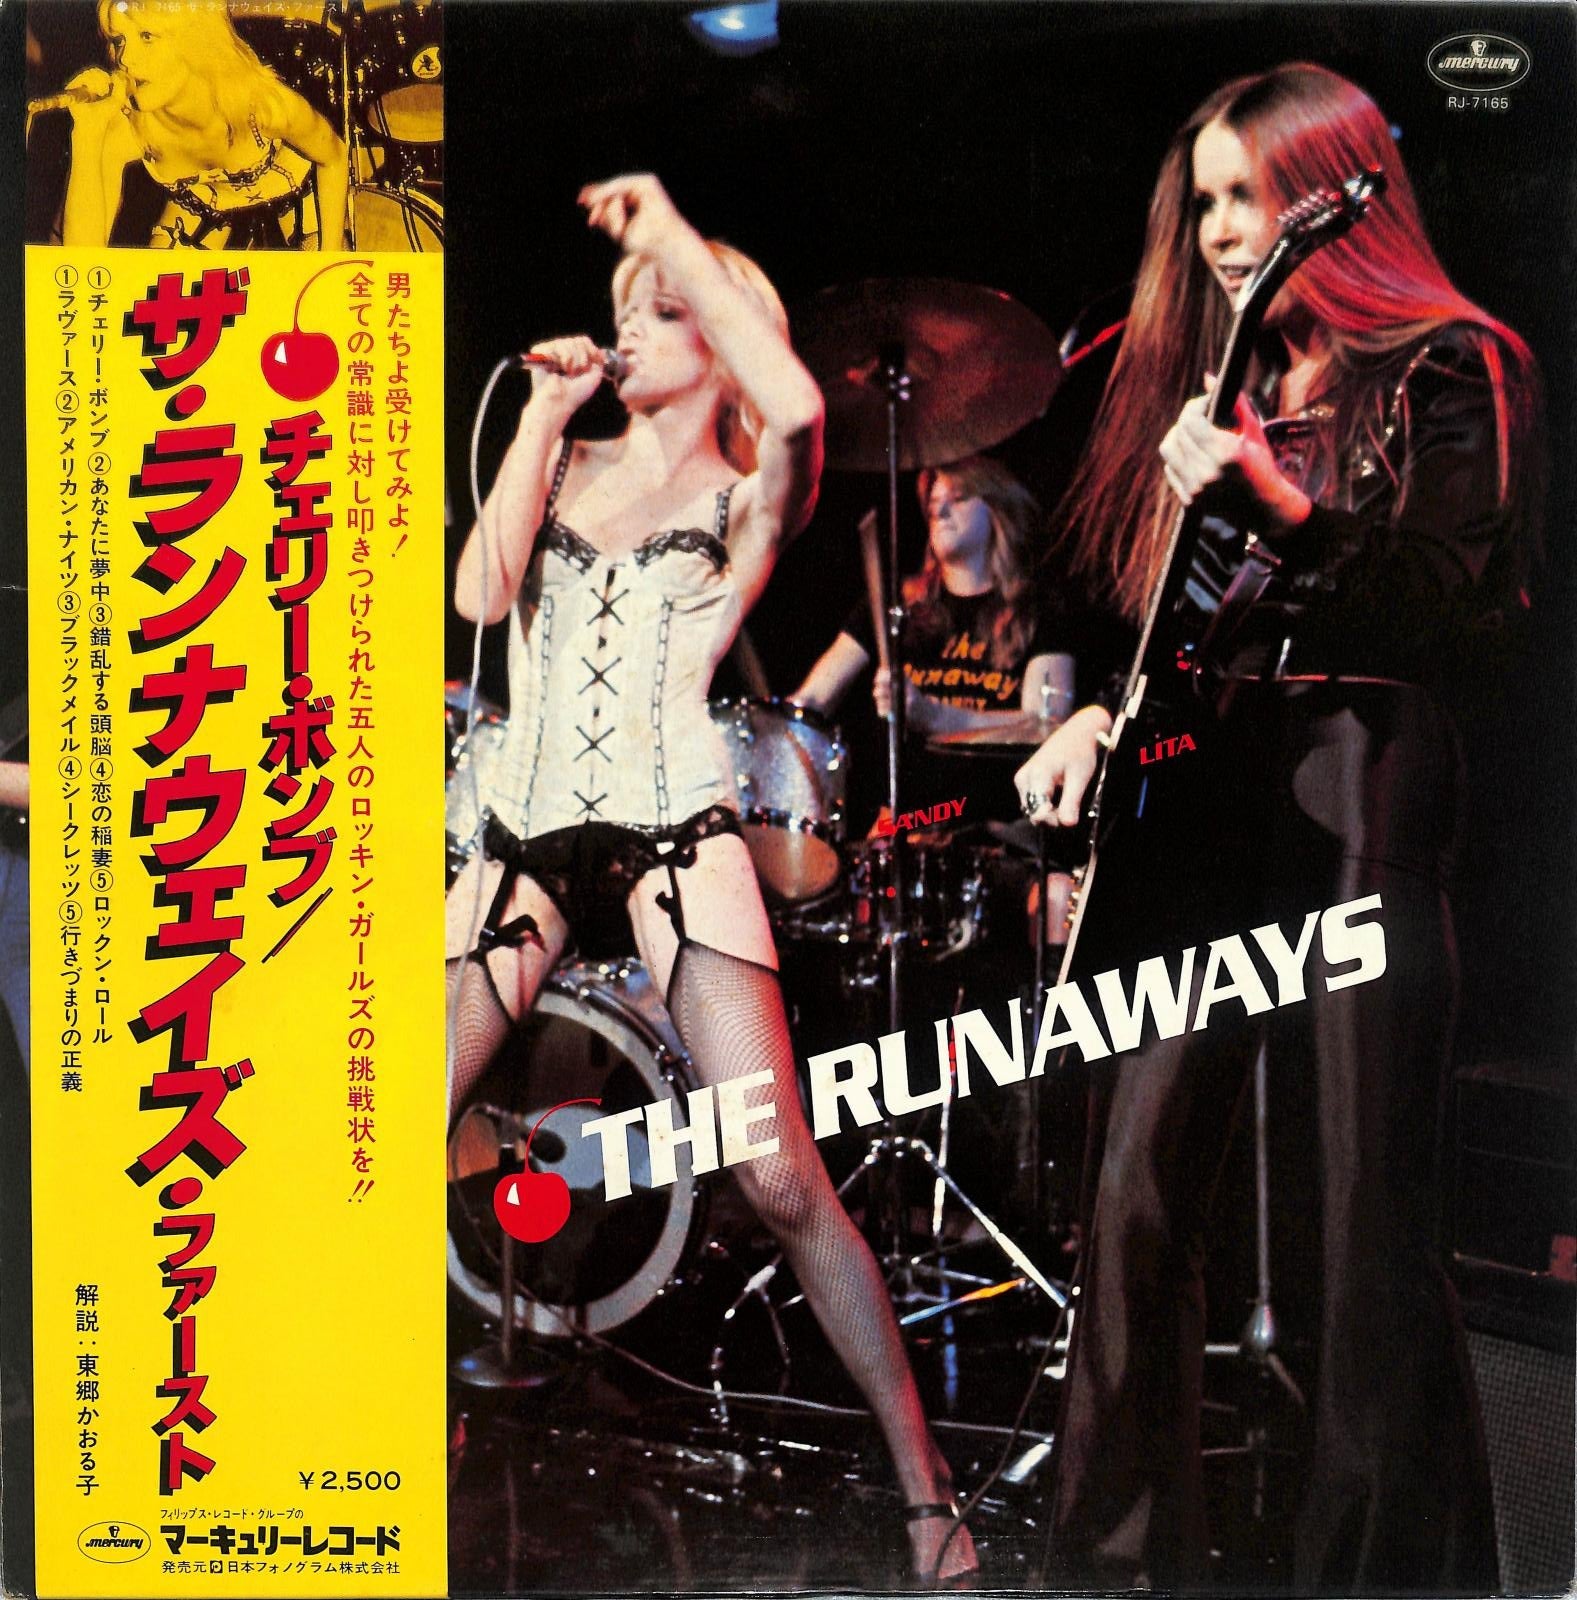 THE RUNAWAYS - The Runaways